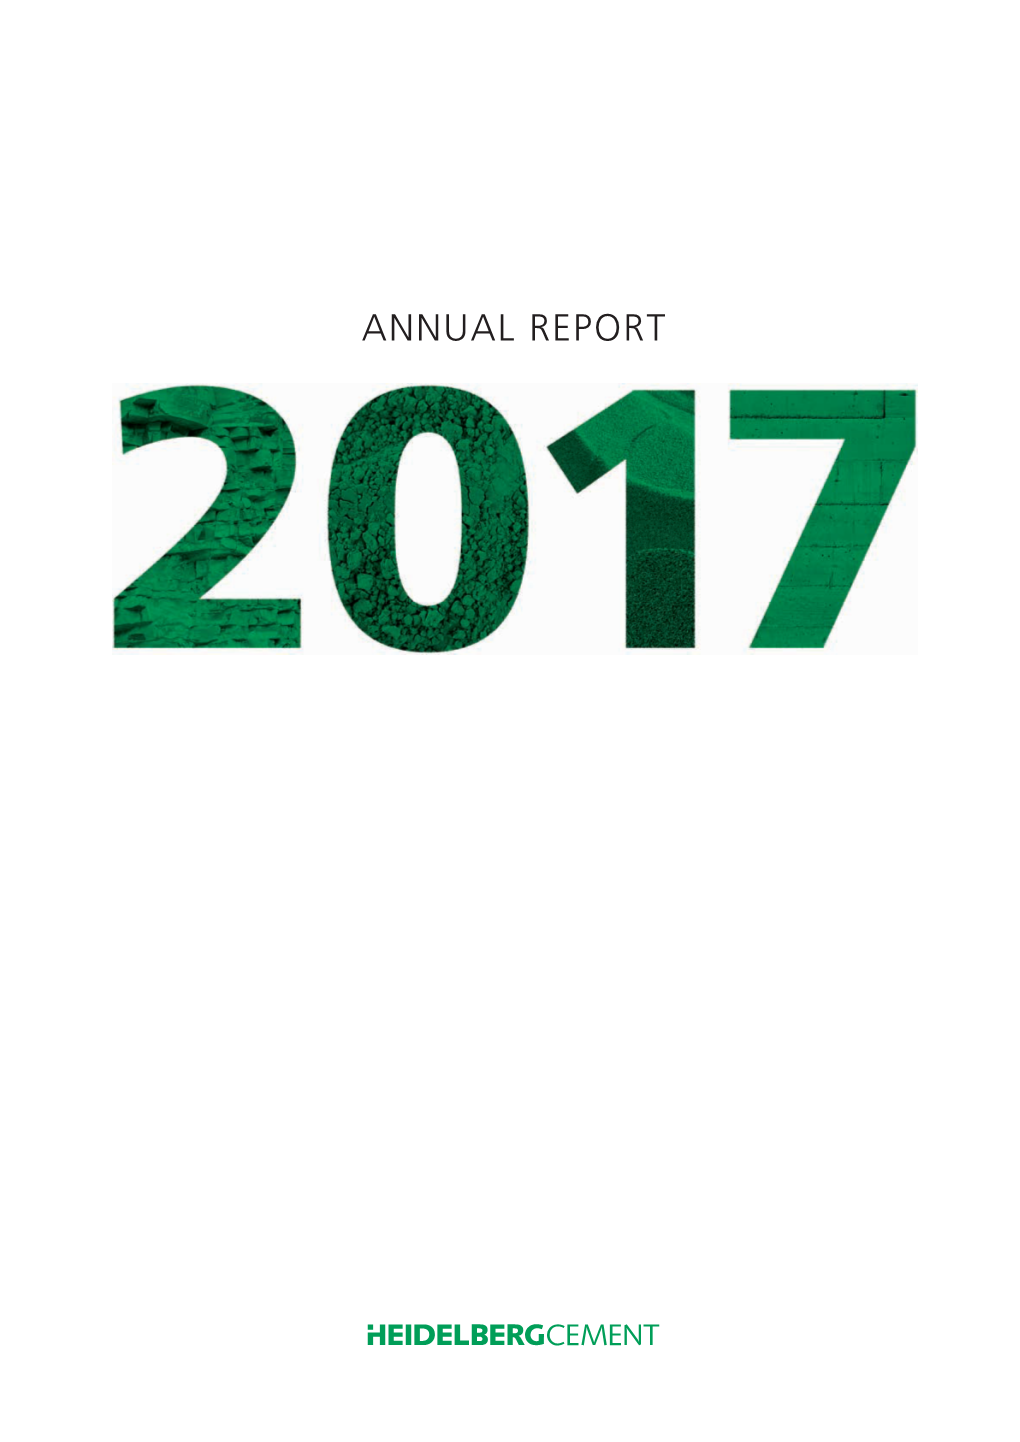 Heidelbergcement Annual Report 2017